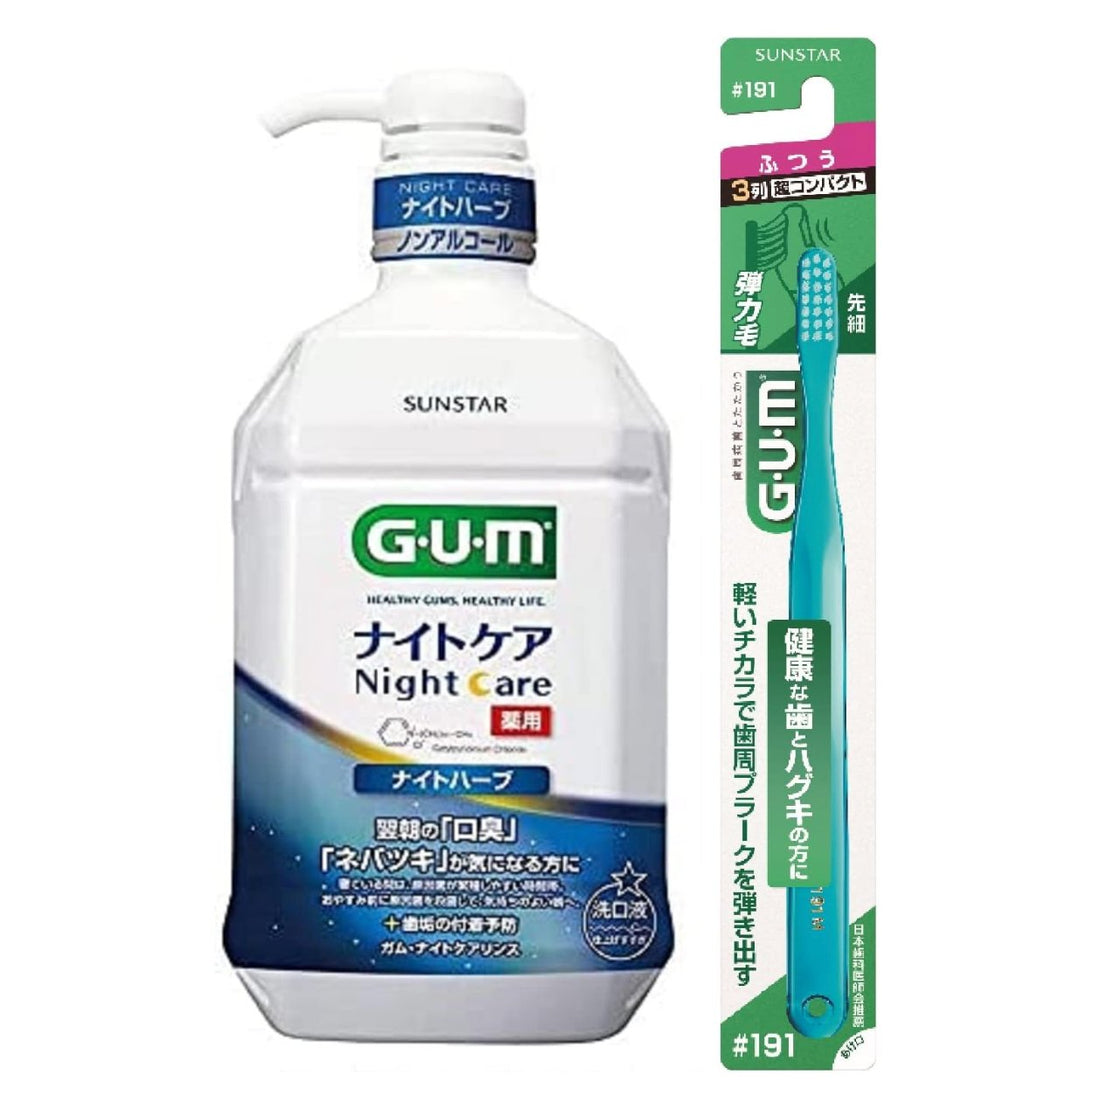 GUM [Quasi-drug] Mouthwash, night care, medicated mouthwash, bad breath care, hug care [Night herb type, non-alcoholic, hypoallergenic] 900ml + 1 toothbrush - NihonMura